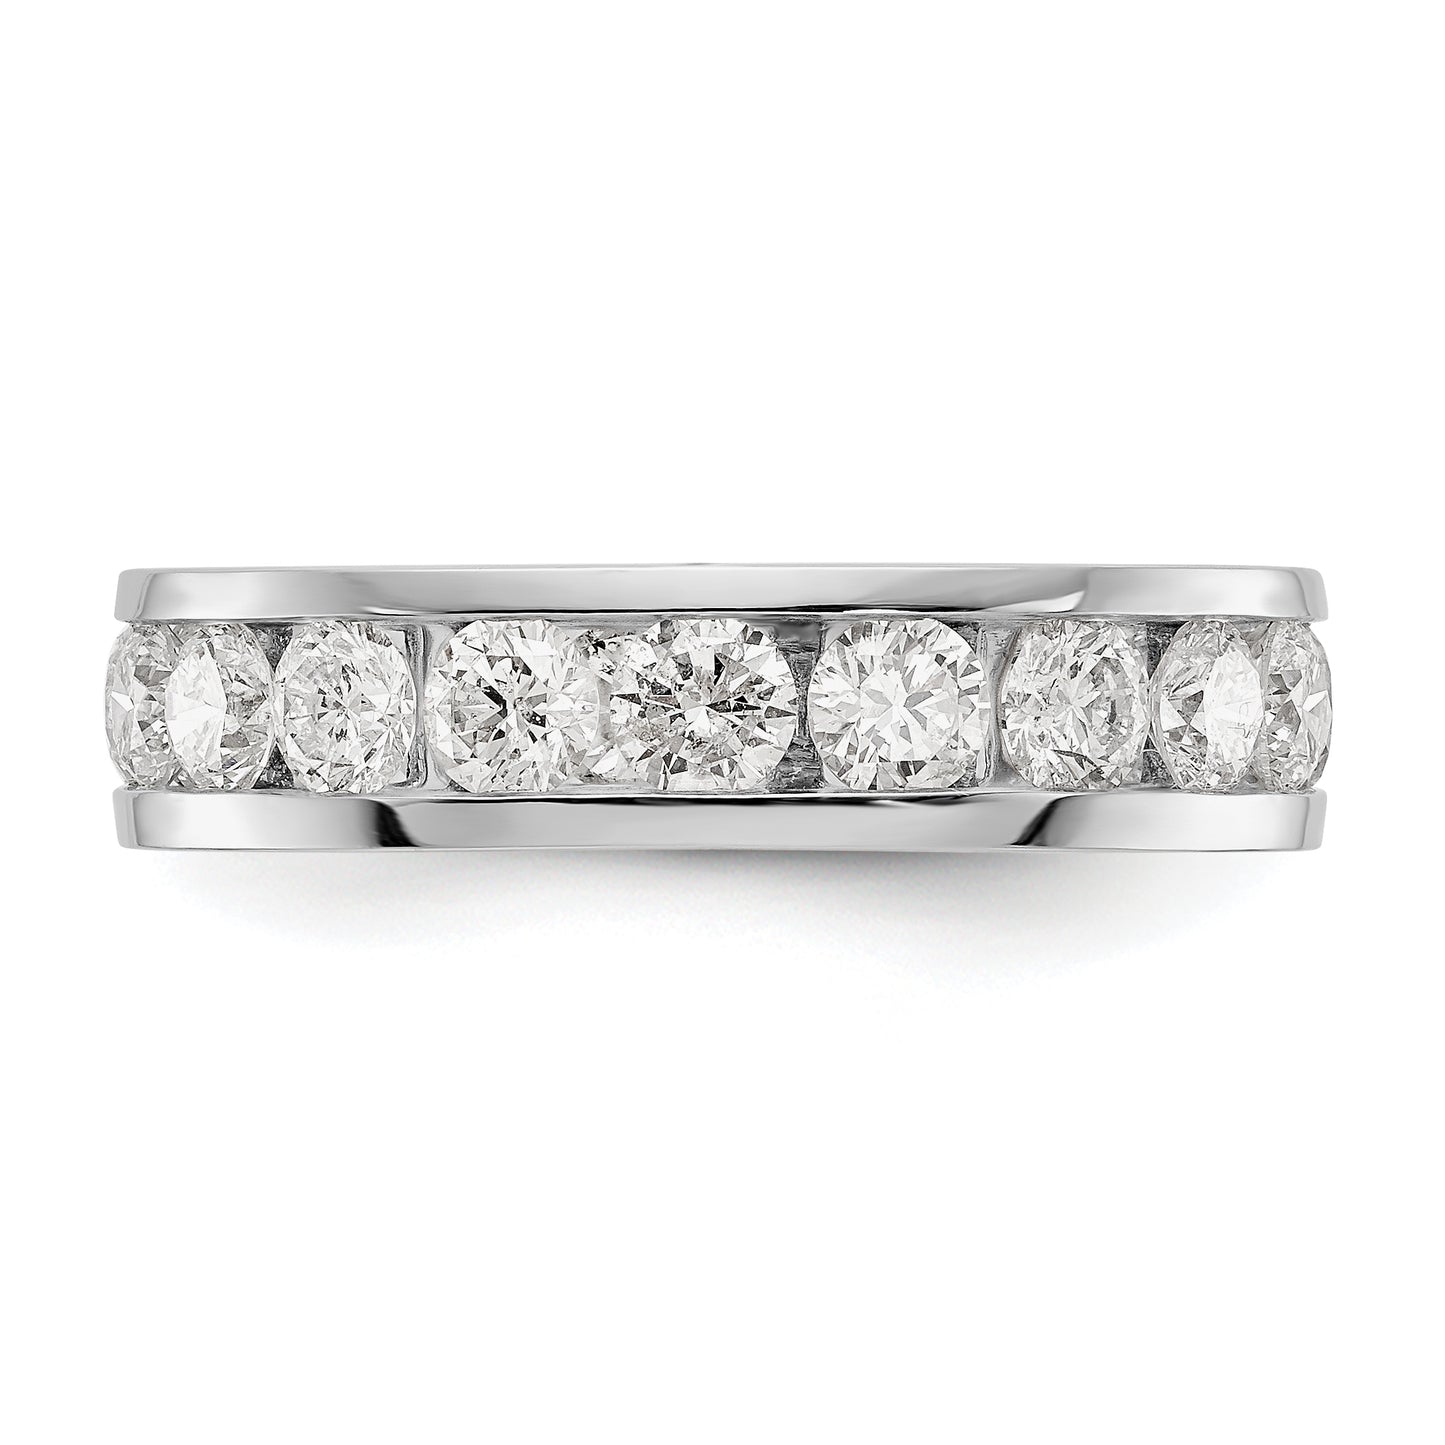 2 Ct. Natural Diamond Womens Eternity Anniversary Wedding Band Ring in 14k White Gold